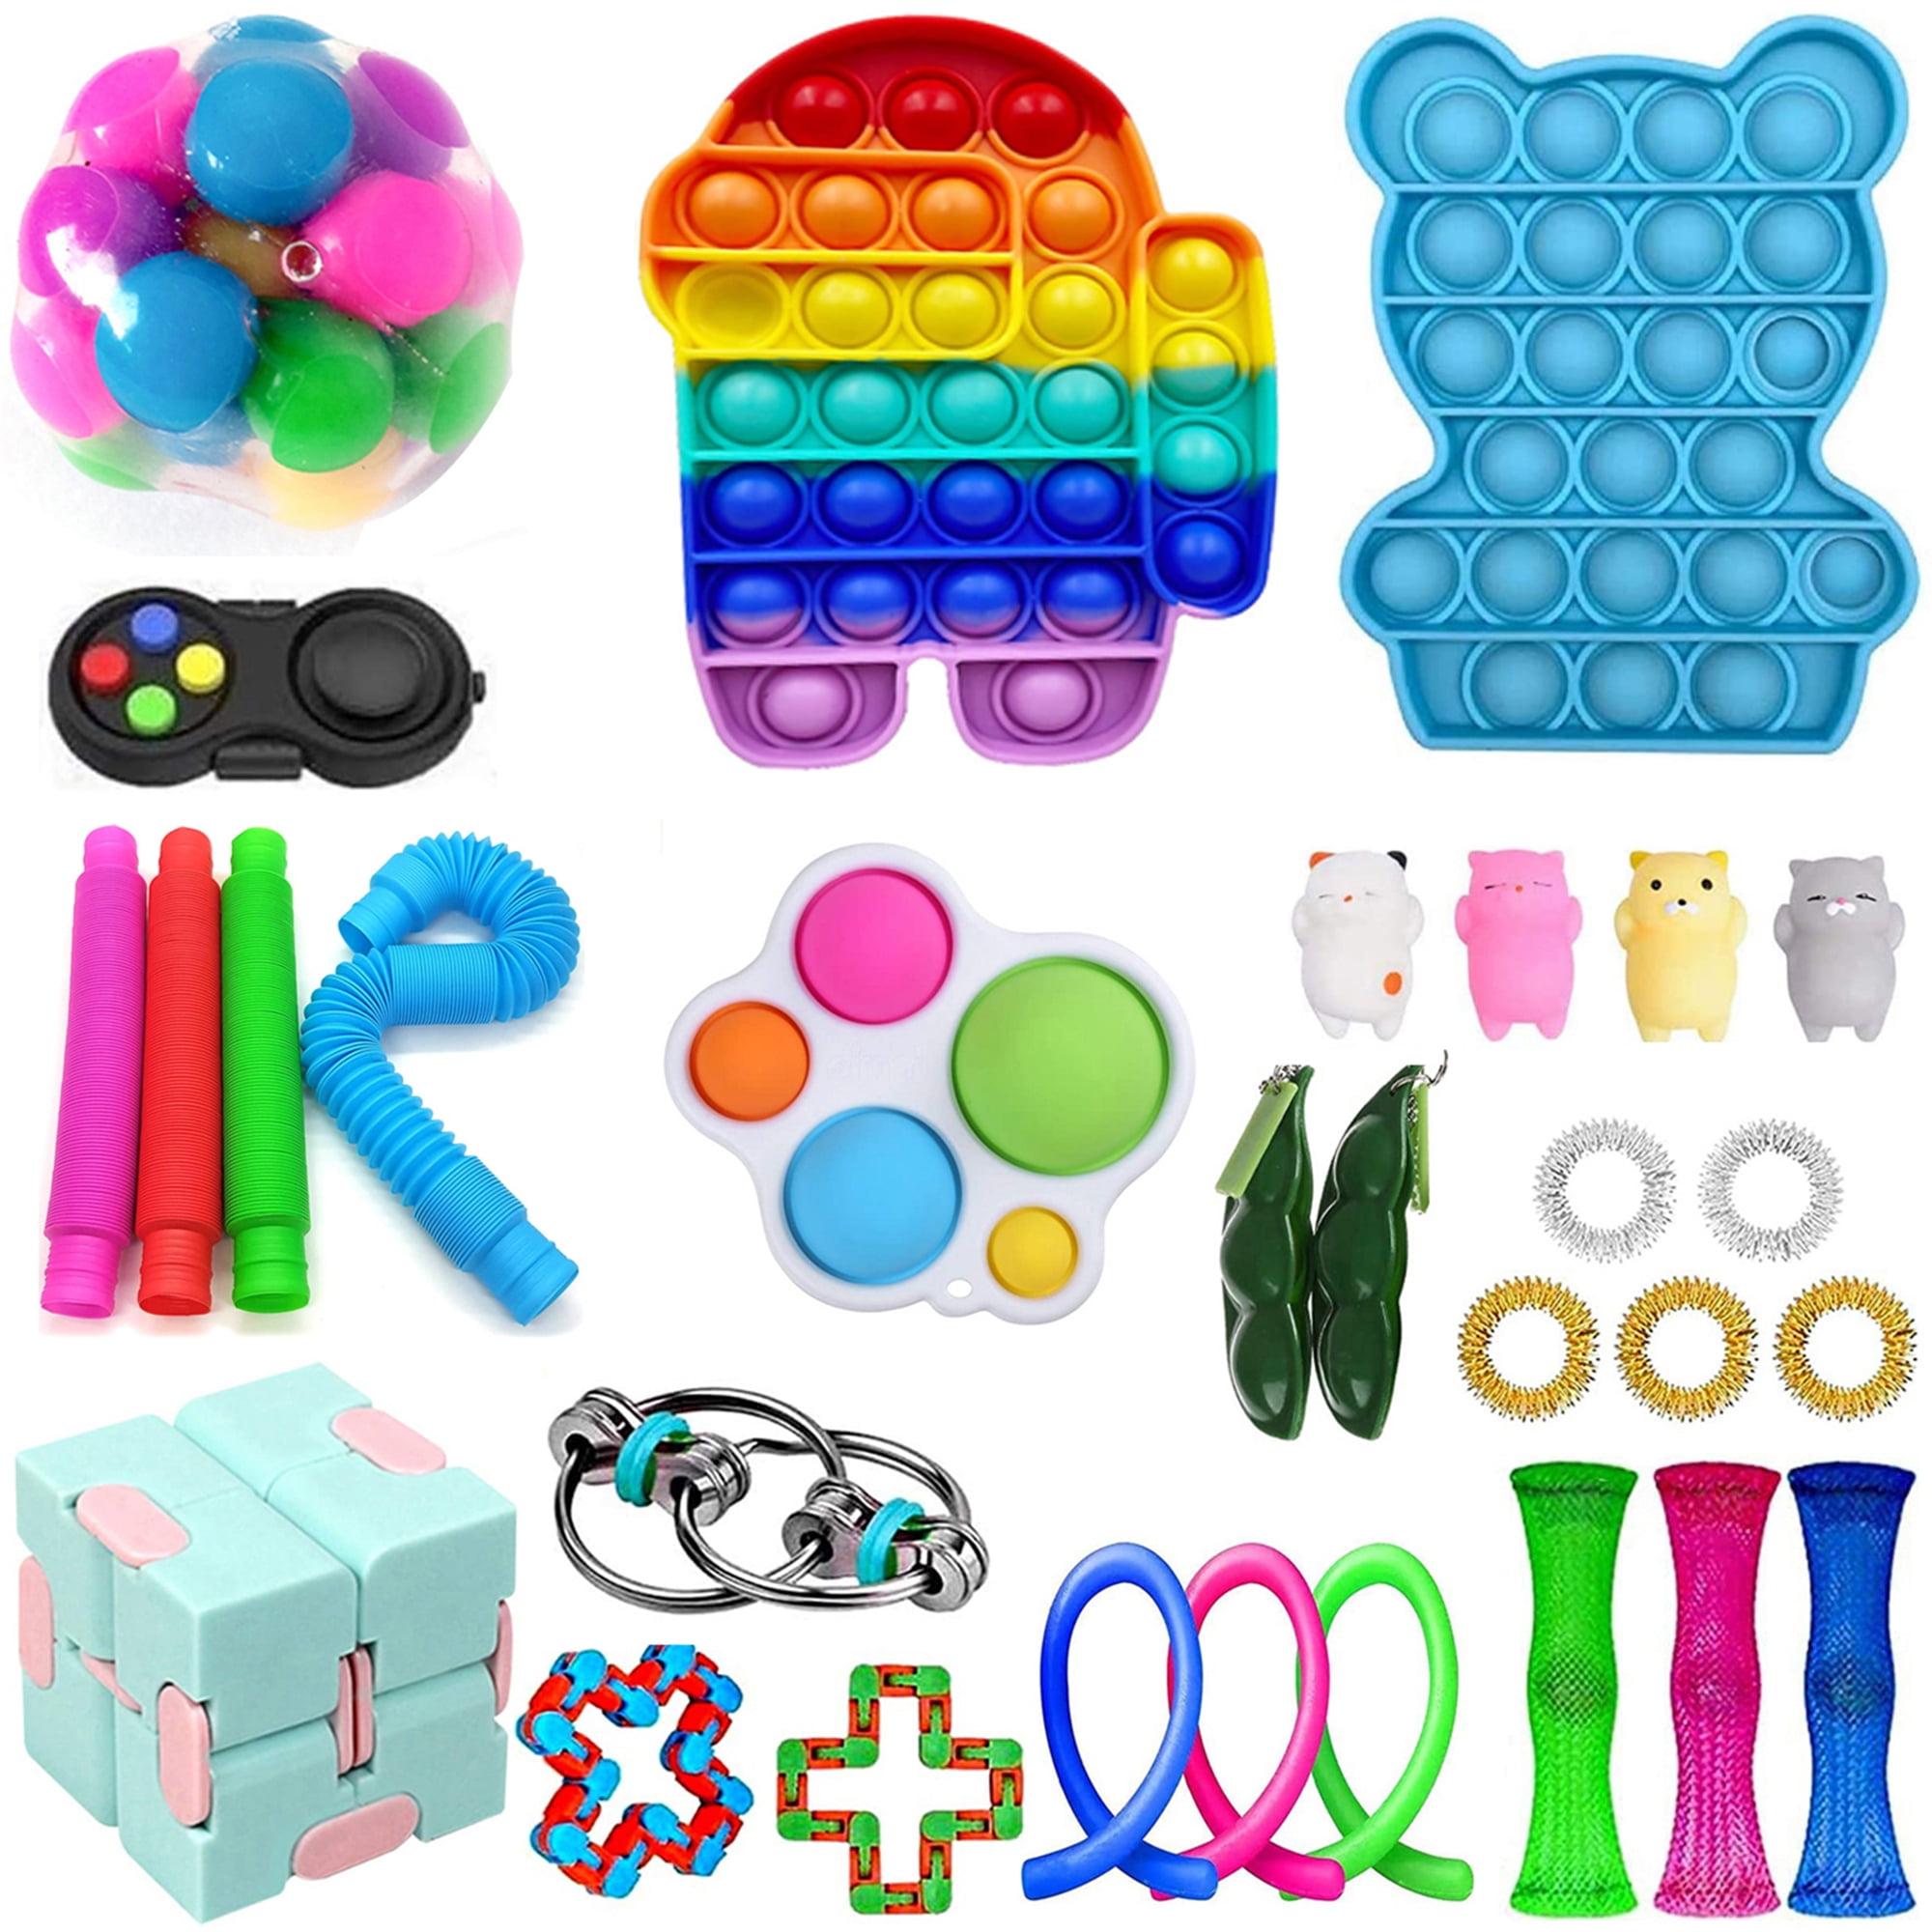 Details about   US 25pc Fidget Toy Set Kit Sensory Tools Bundle Stress Relief Hand Toy Kid Adult 